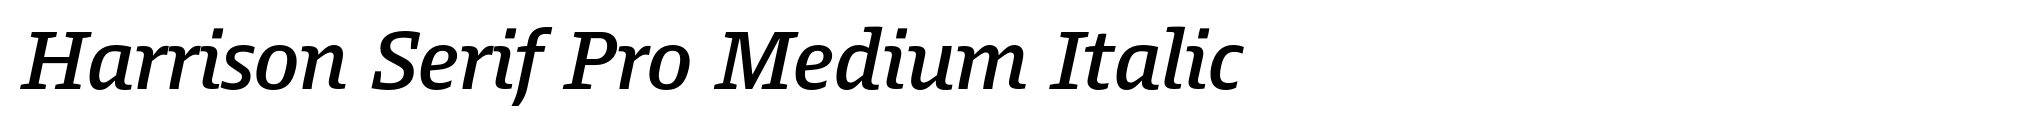 Harrison Serif Pro Medium Italic image